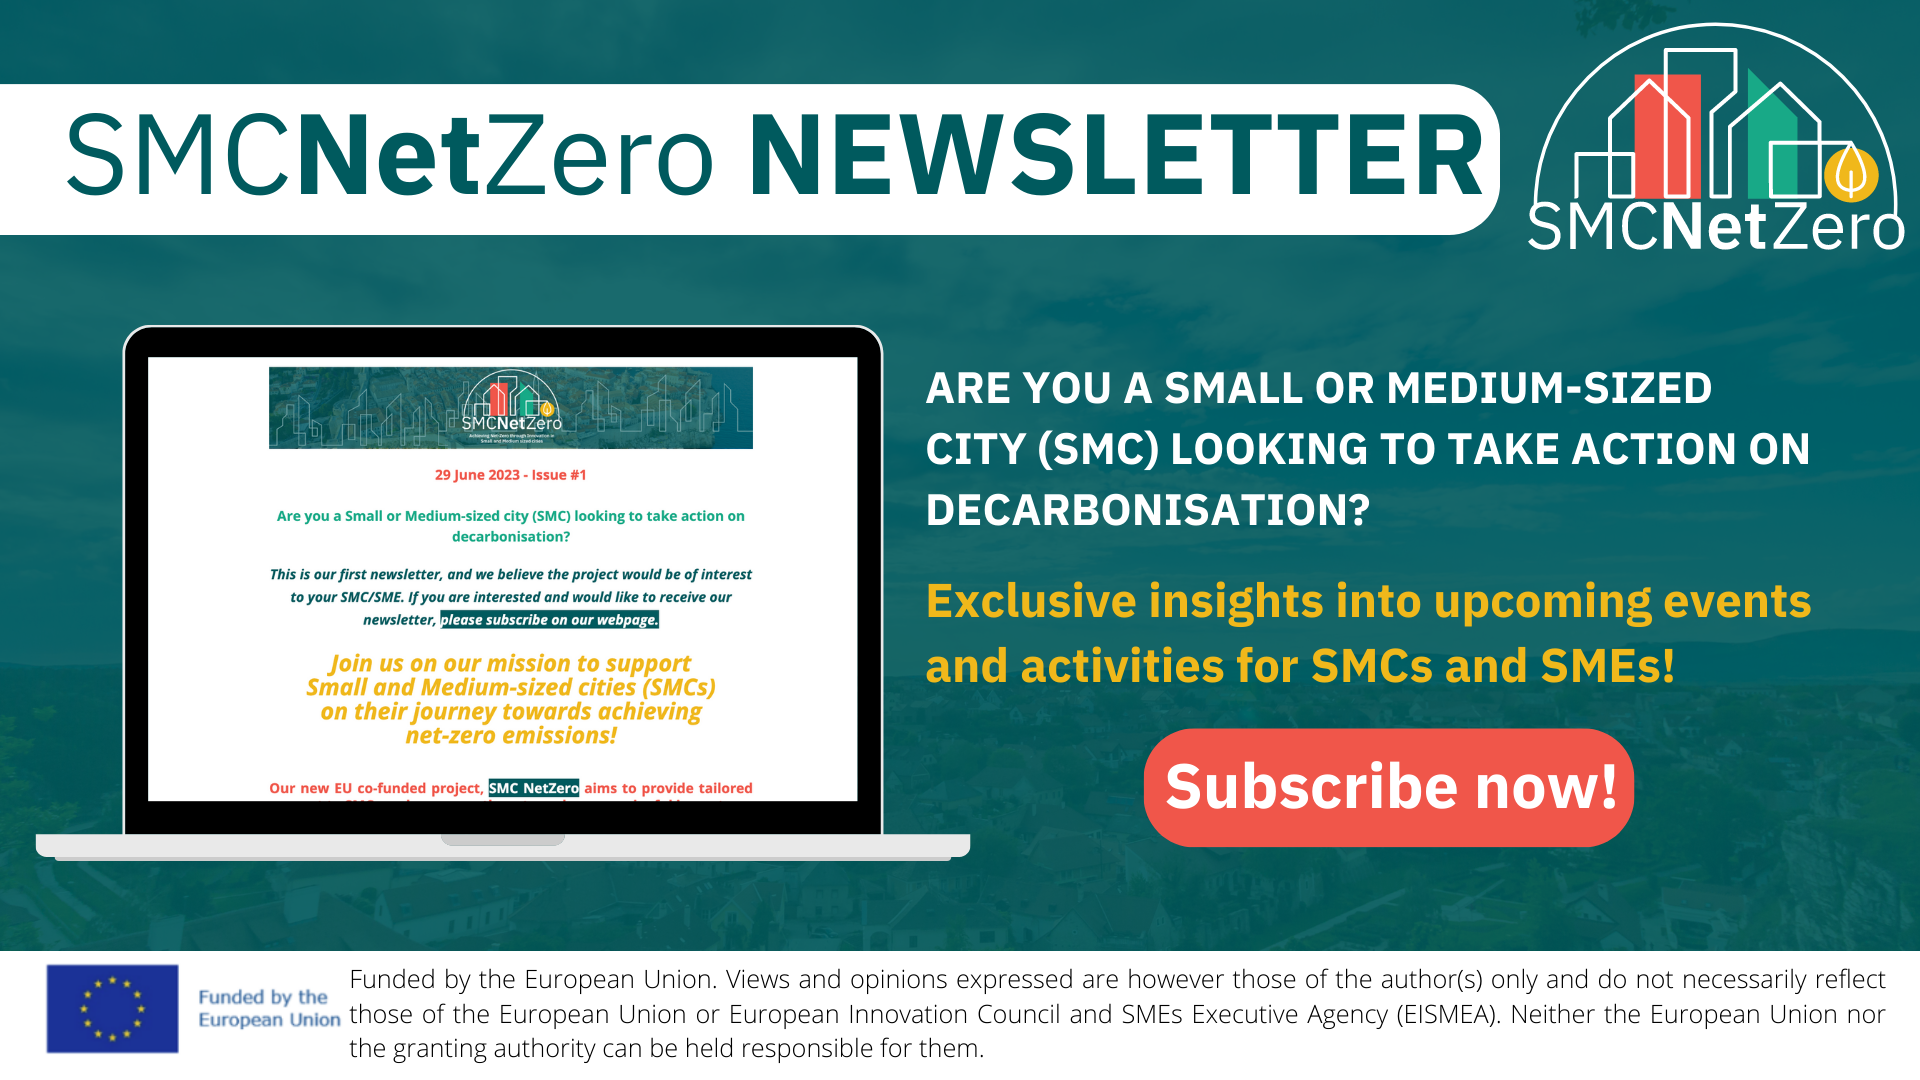 SMCNetZero Newsletter now available